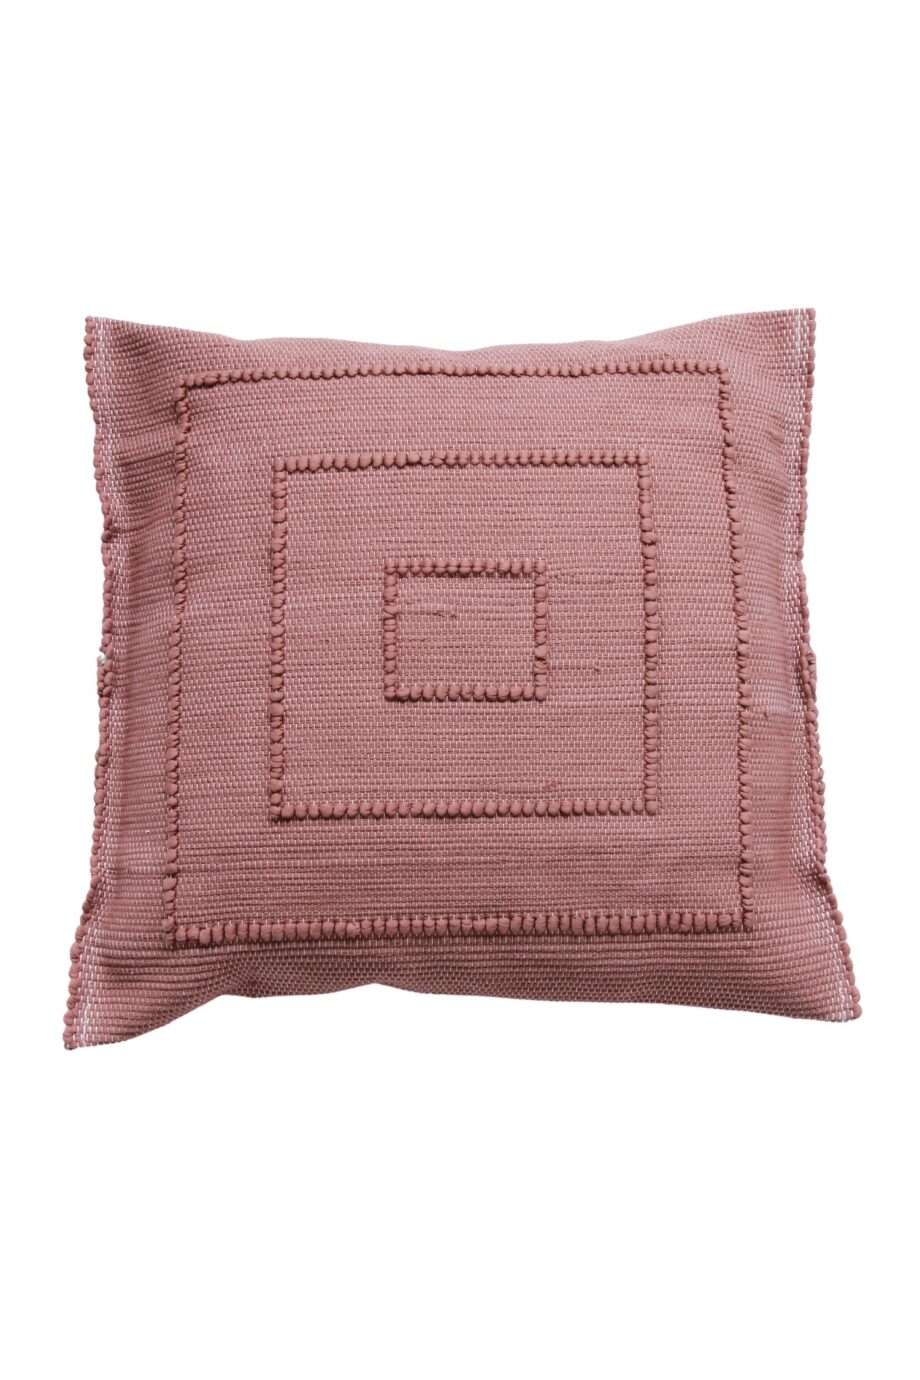 quadro marsala rose woven cotton pillowcase medium